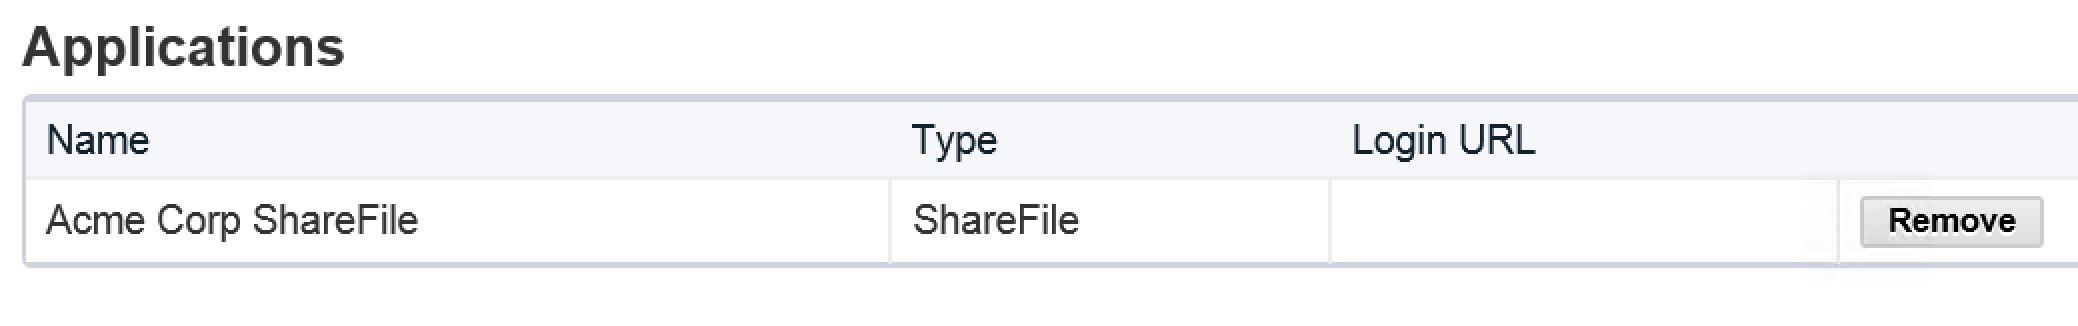 ShareFile Application Added